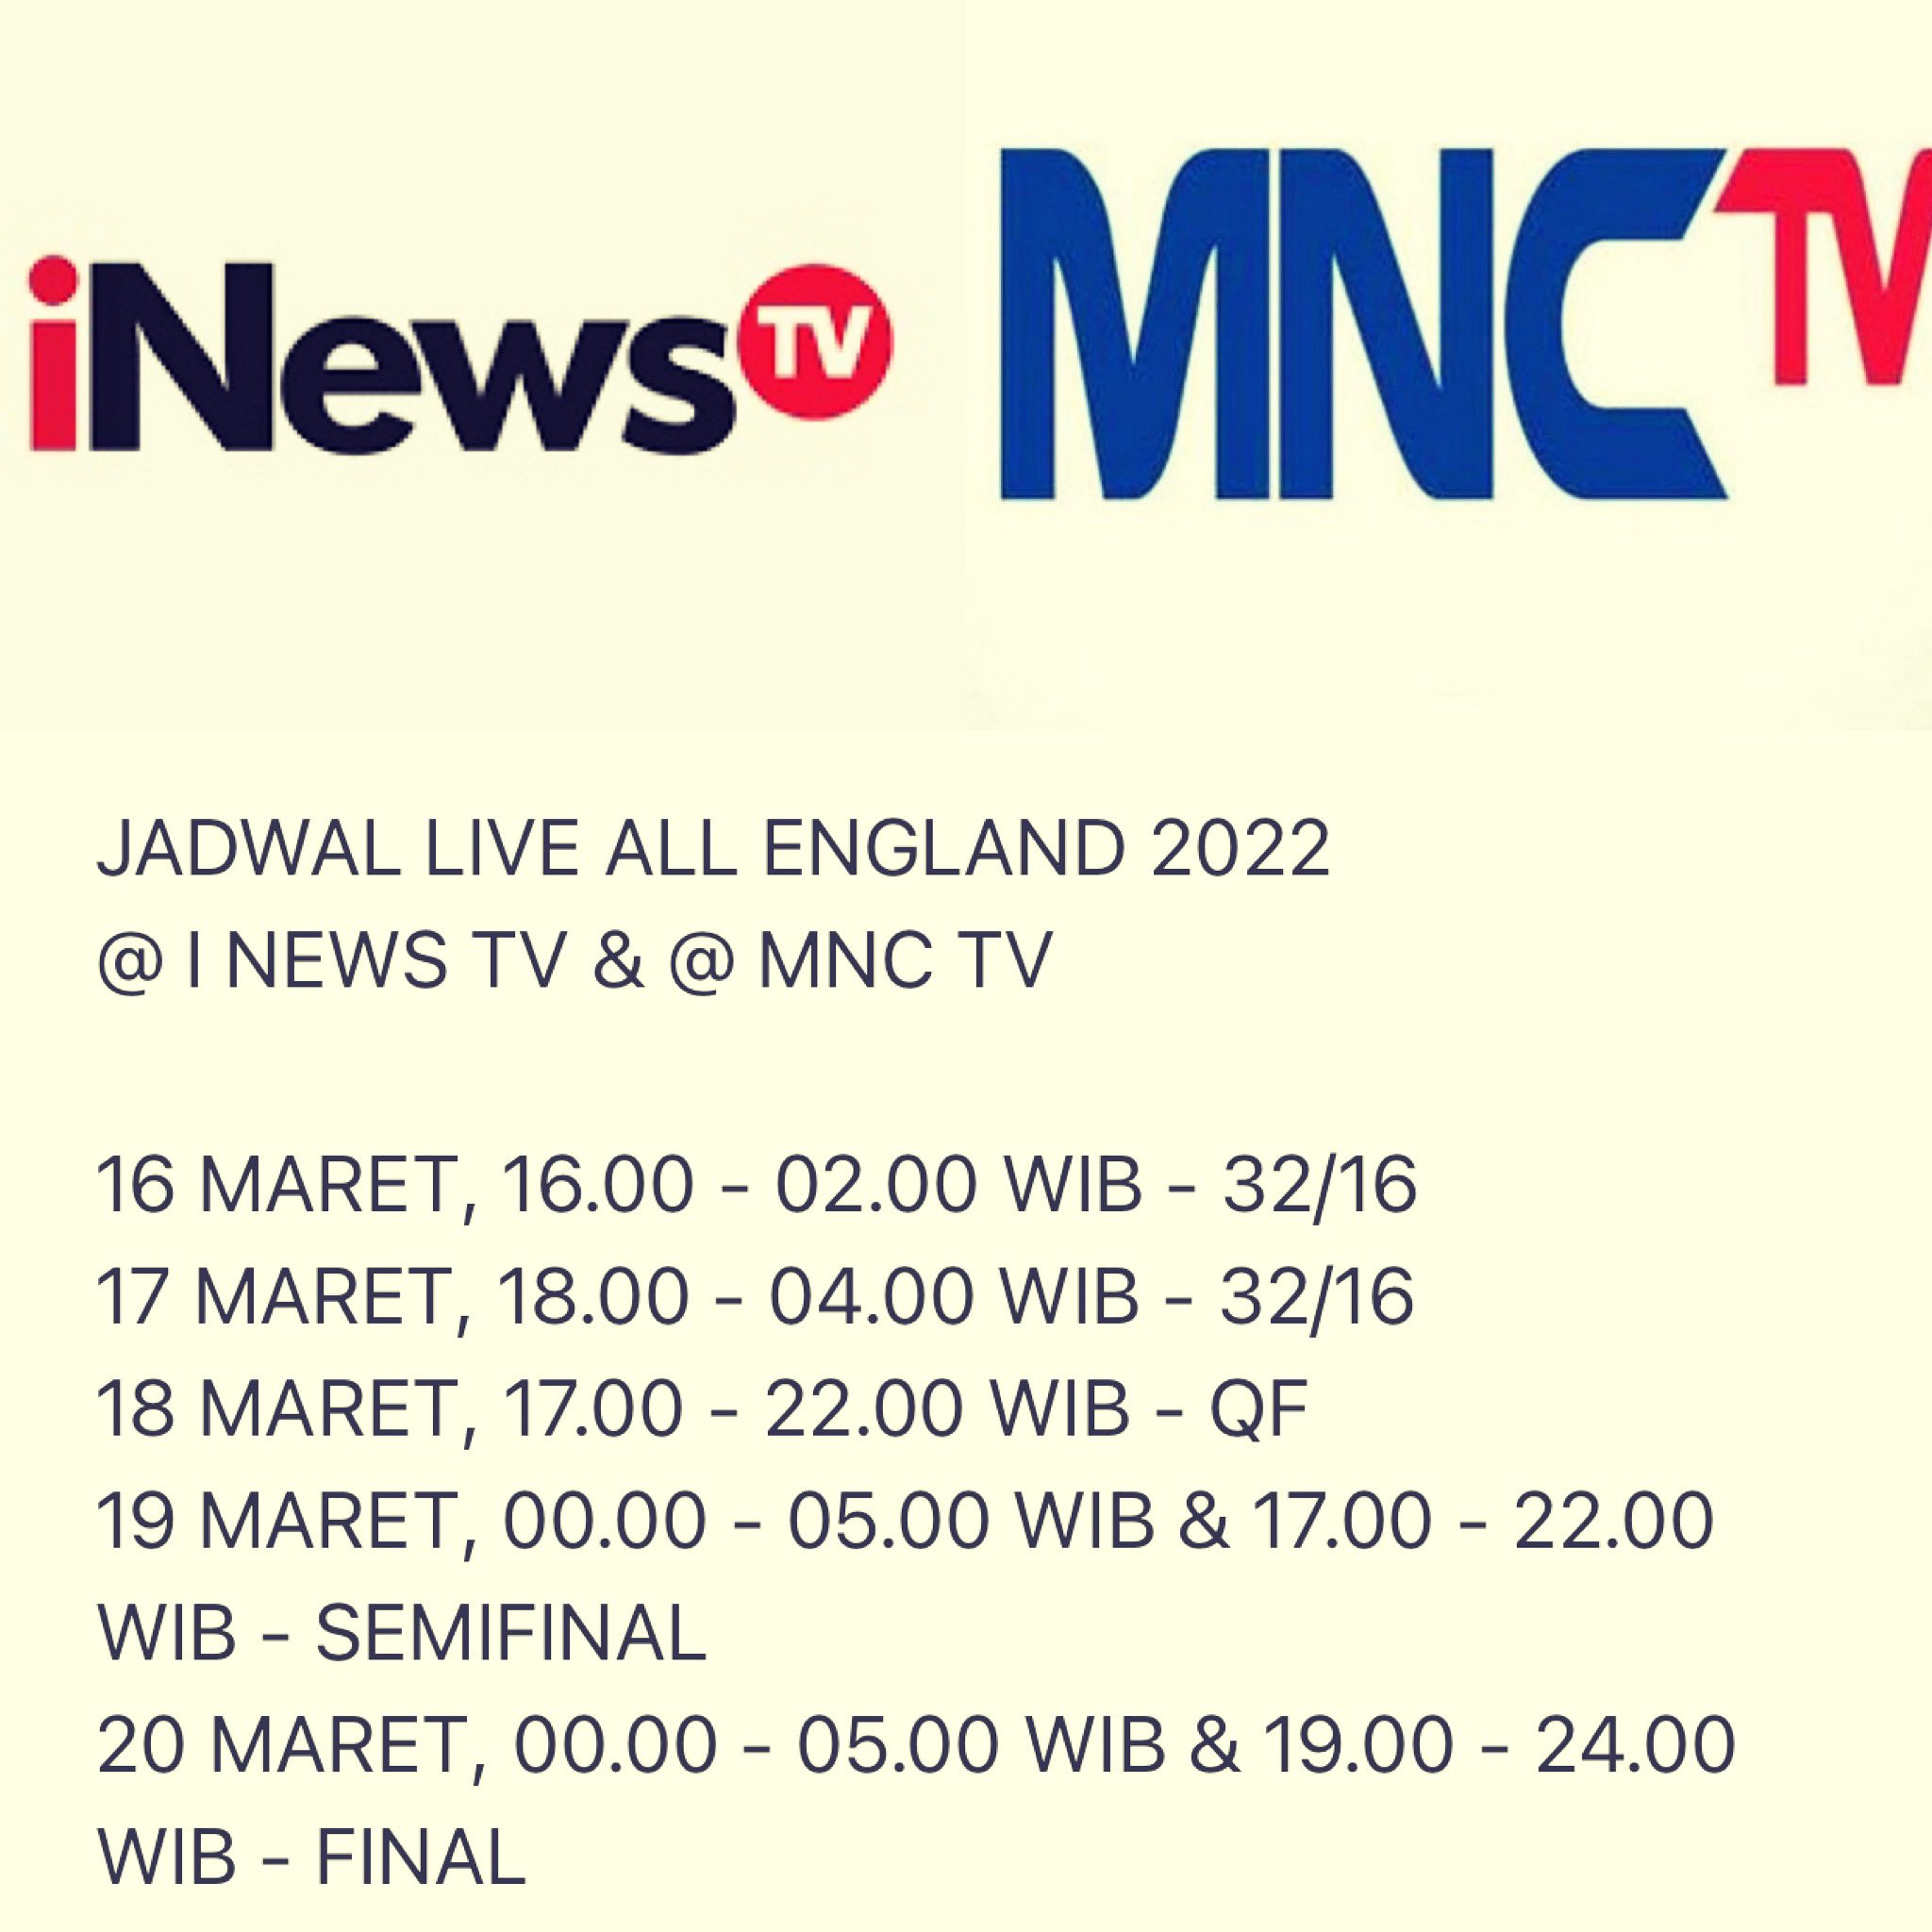 mnc live streaming all england 2022